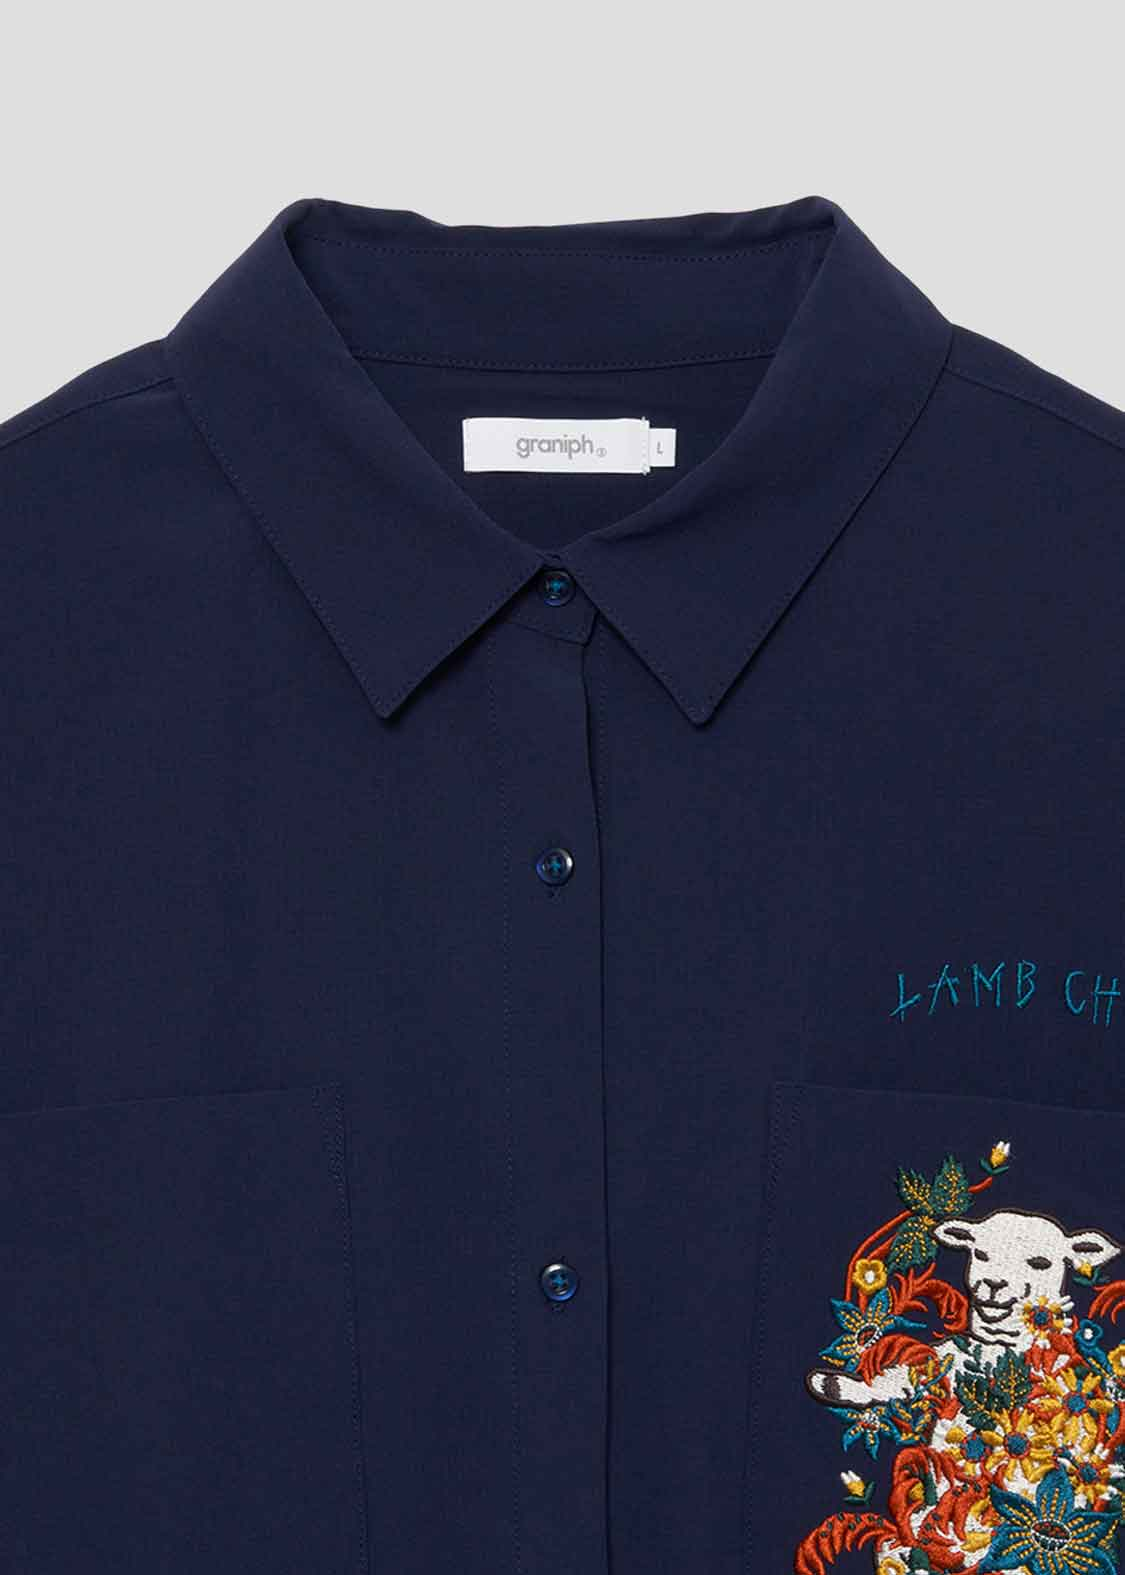 Drawstring Cropped Long Sleeve Shirt (Flower Kung Fu Lamb Chop)